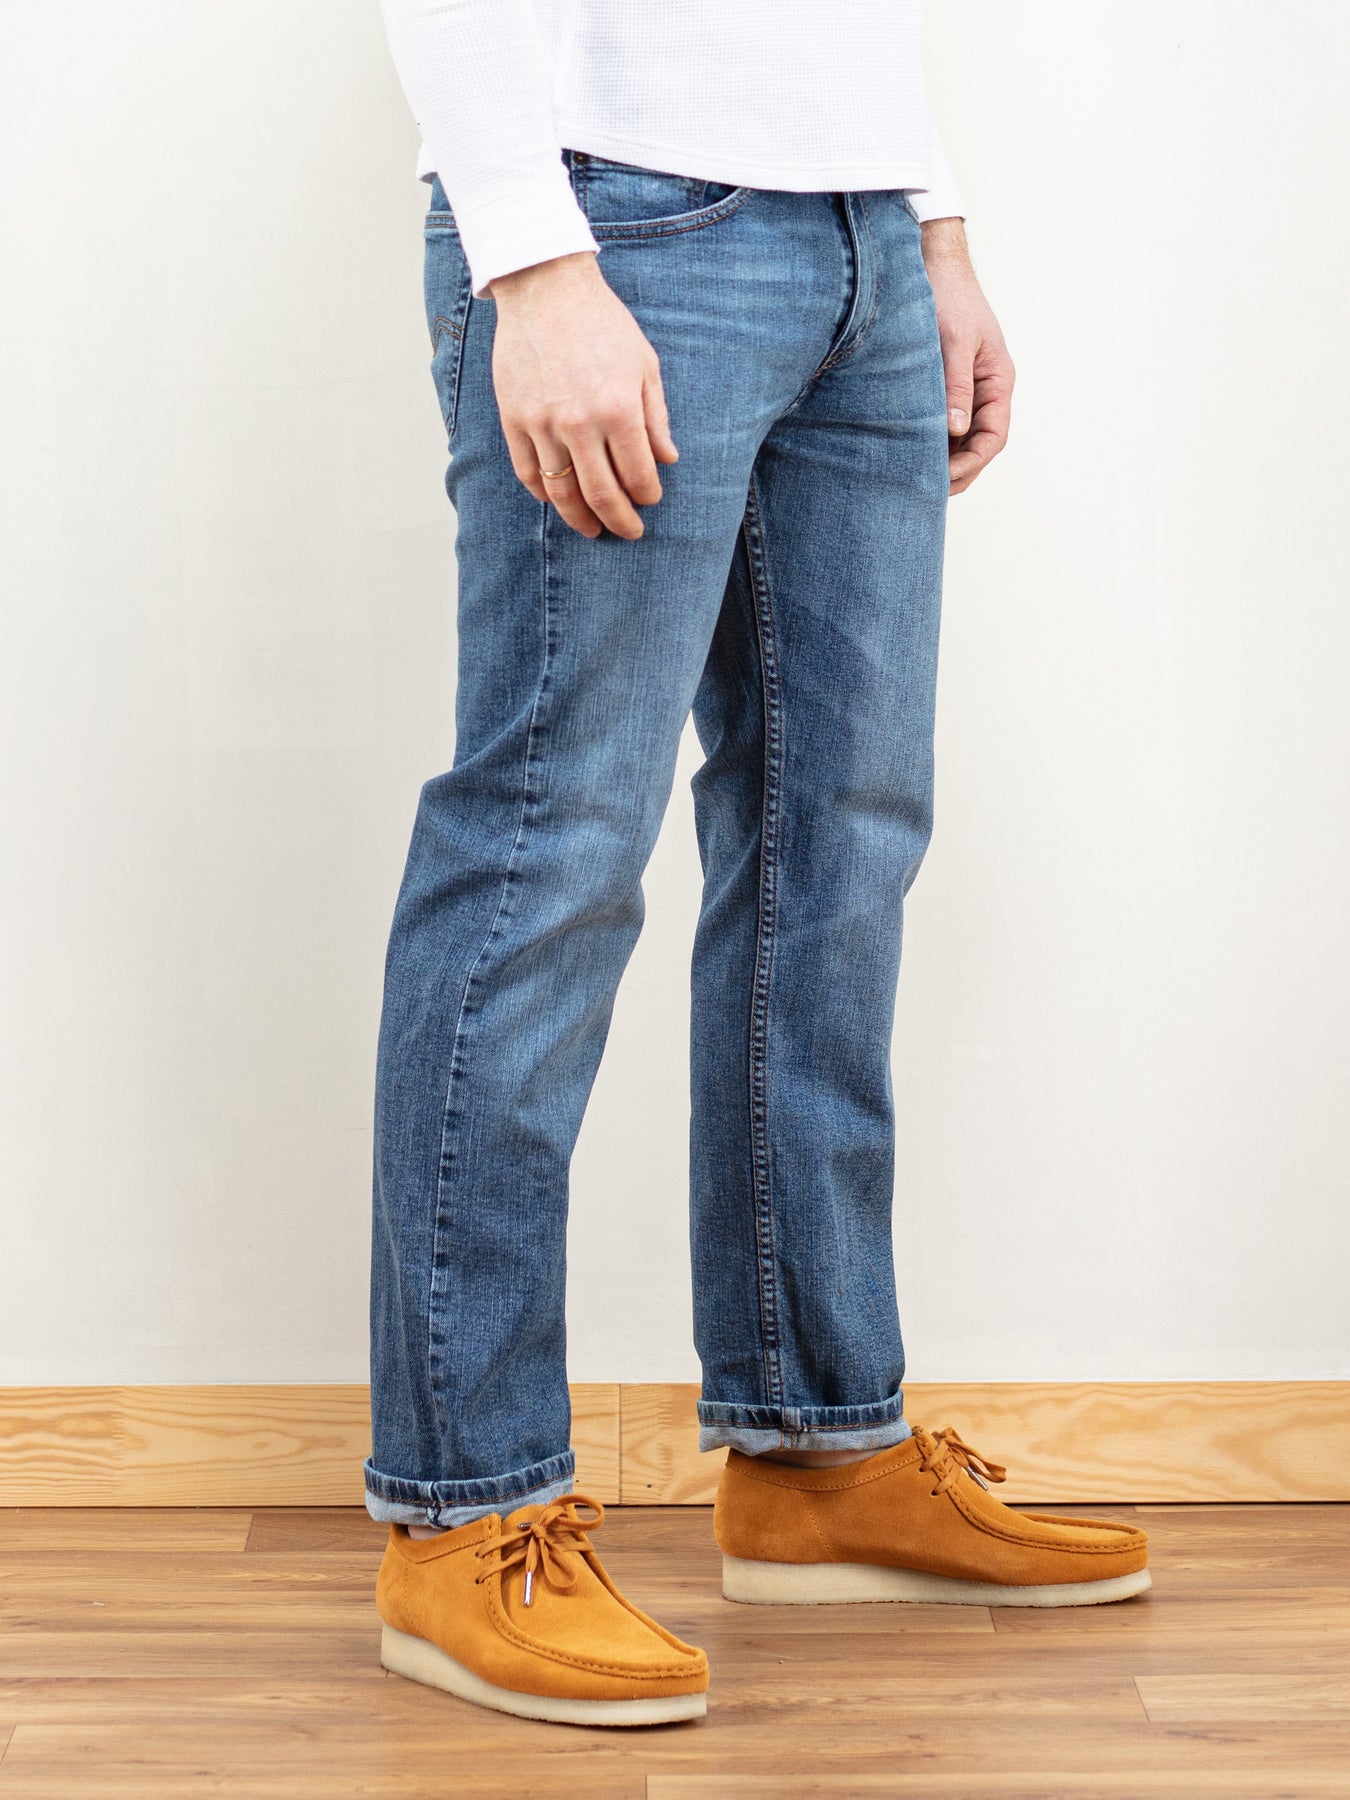 Shop for Vintage 90's Levis 581 Jeans | NORTHERN GRIP – NorthernGrip